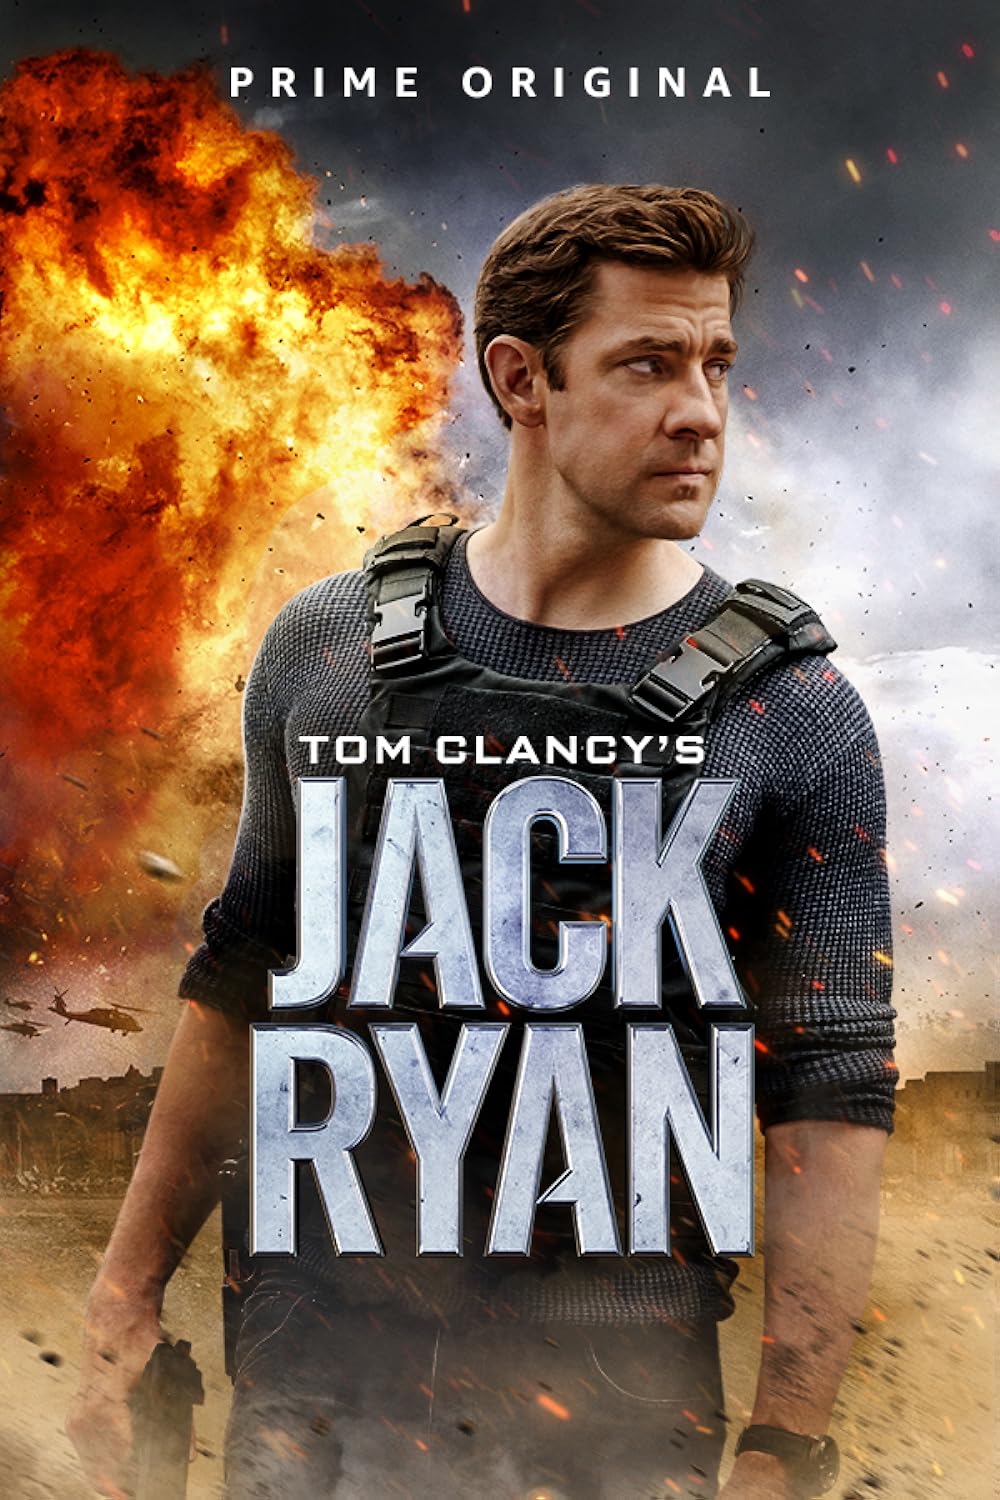 Tom Clancy's Jack Ryan (2019) S2 EP01&EP08 640Kbps 23.976Fps 48Khz 5.1Ch DD+ AMZN E-AC3 Turkish Audio TAC